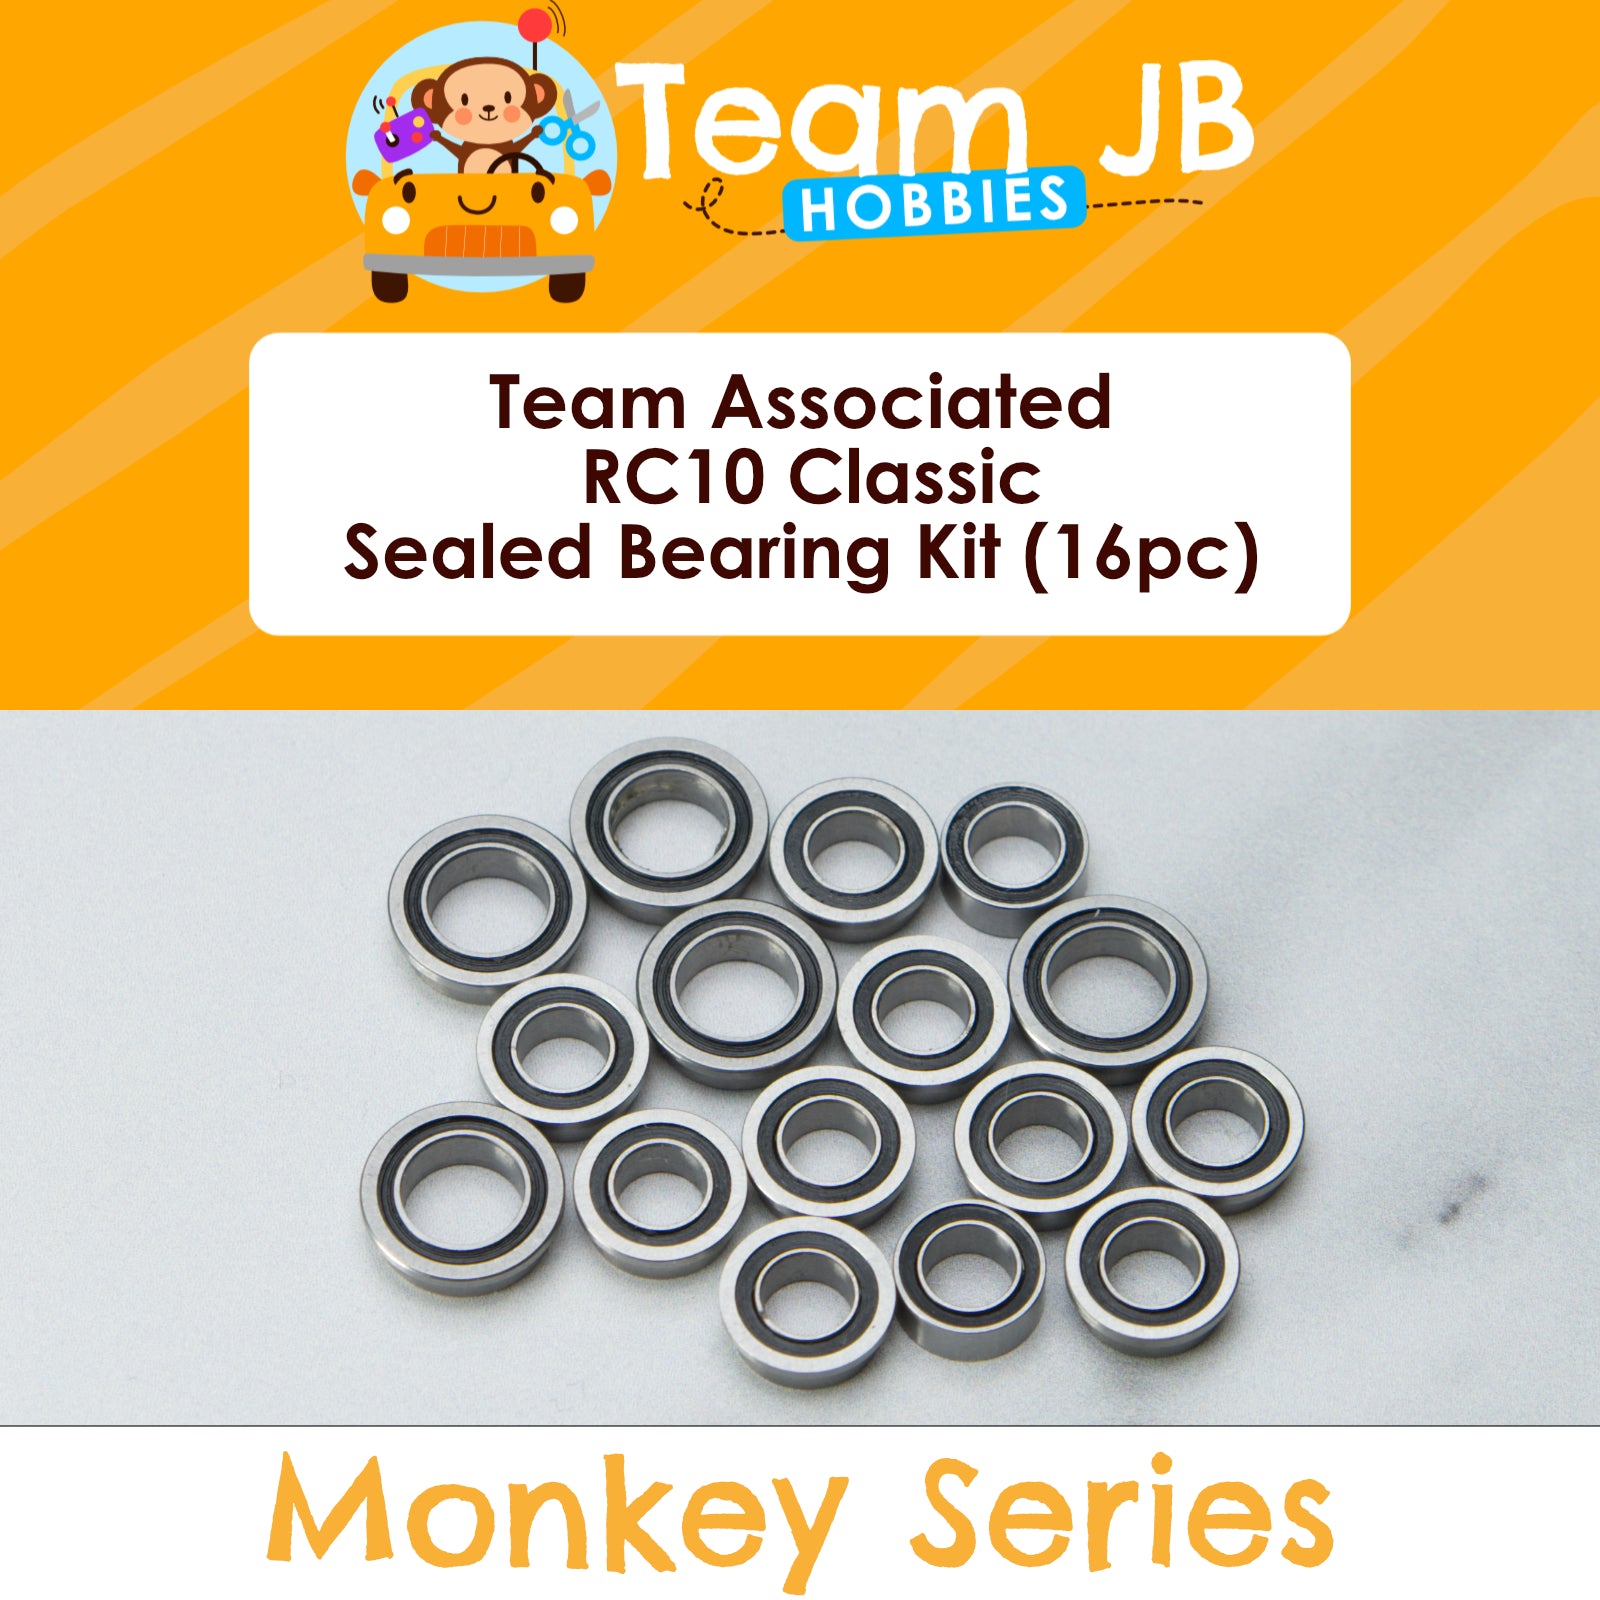 Team Associated RC10 Classic - Sealed Bearing Kit